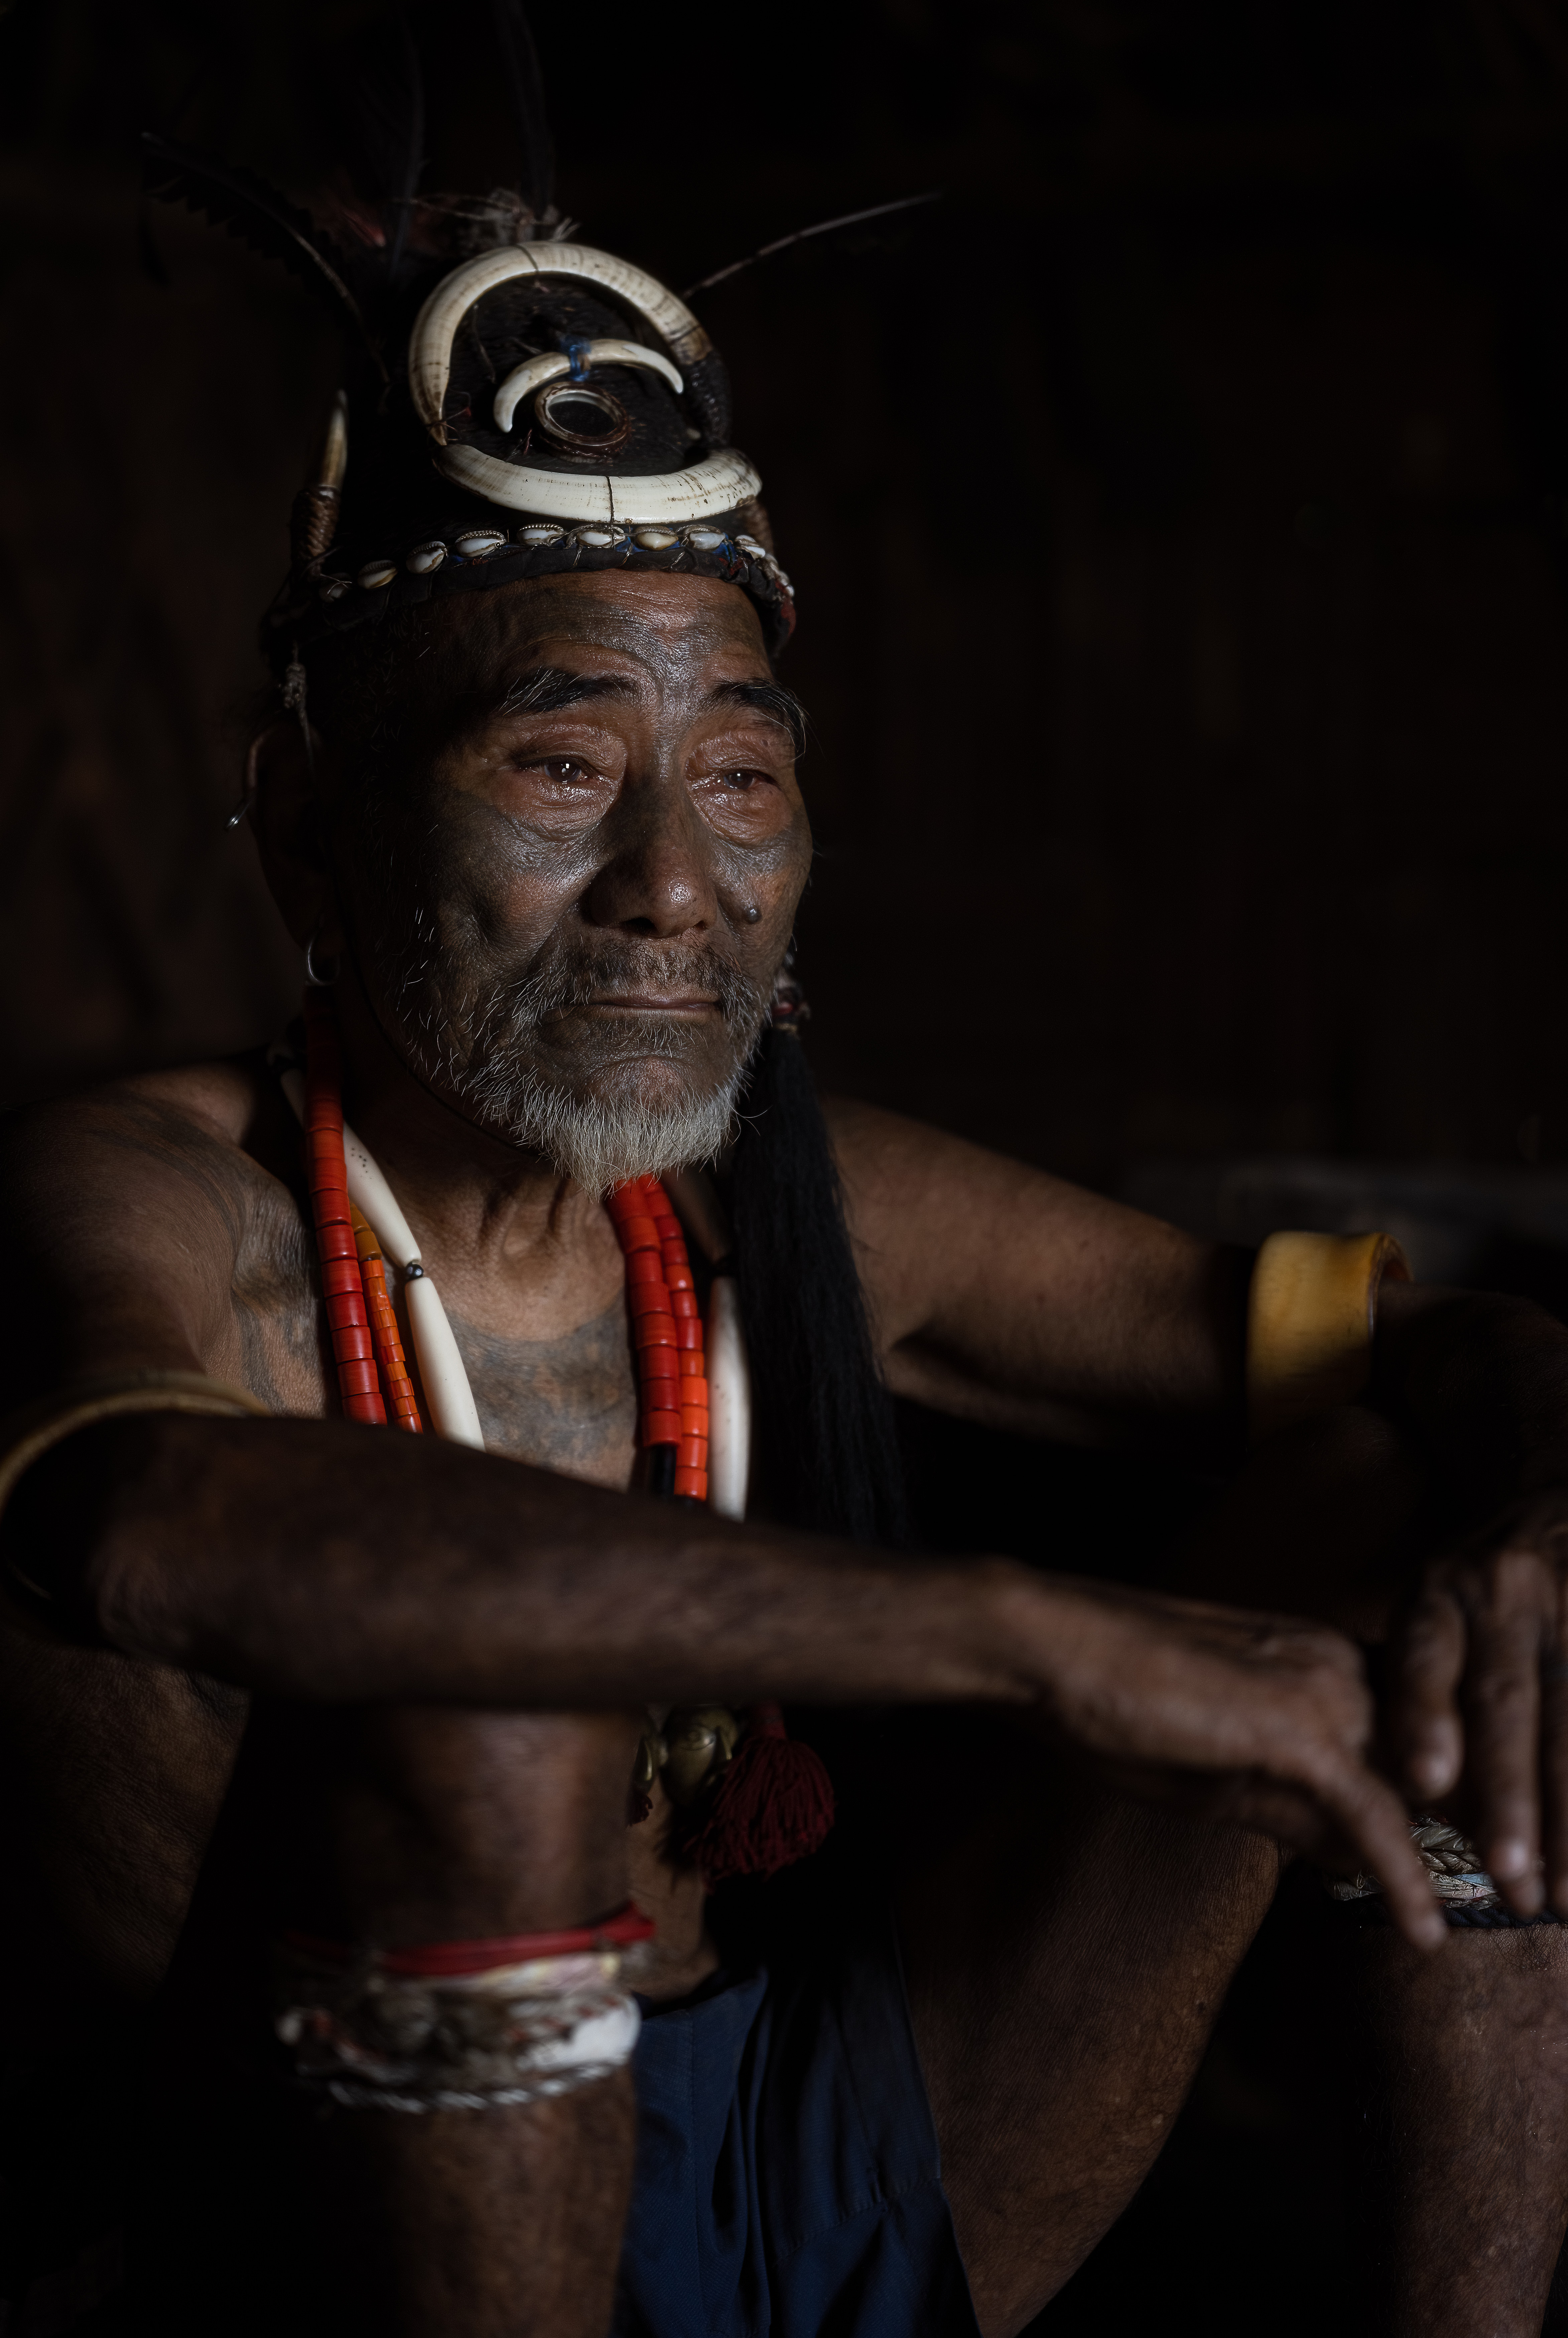 Nagaland - Photographing India's Last Headhunters